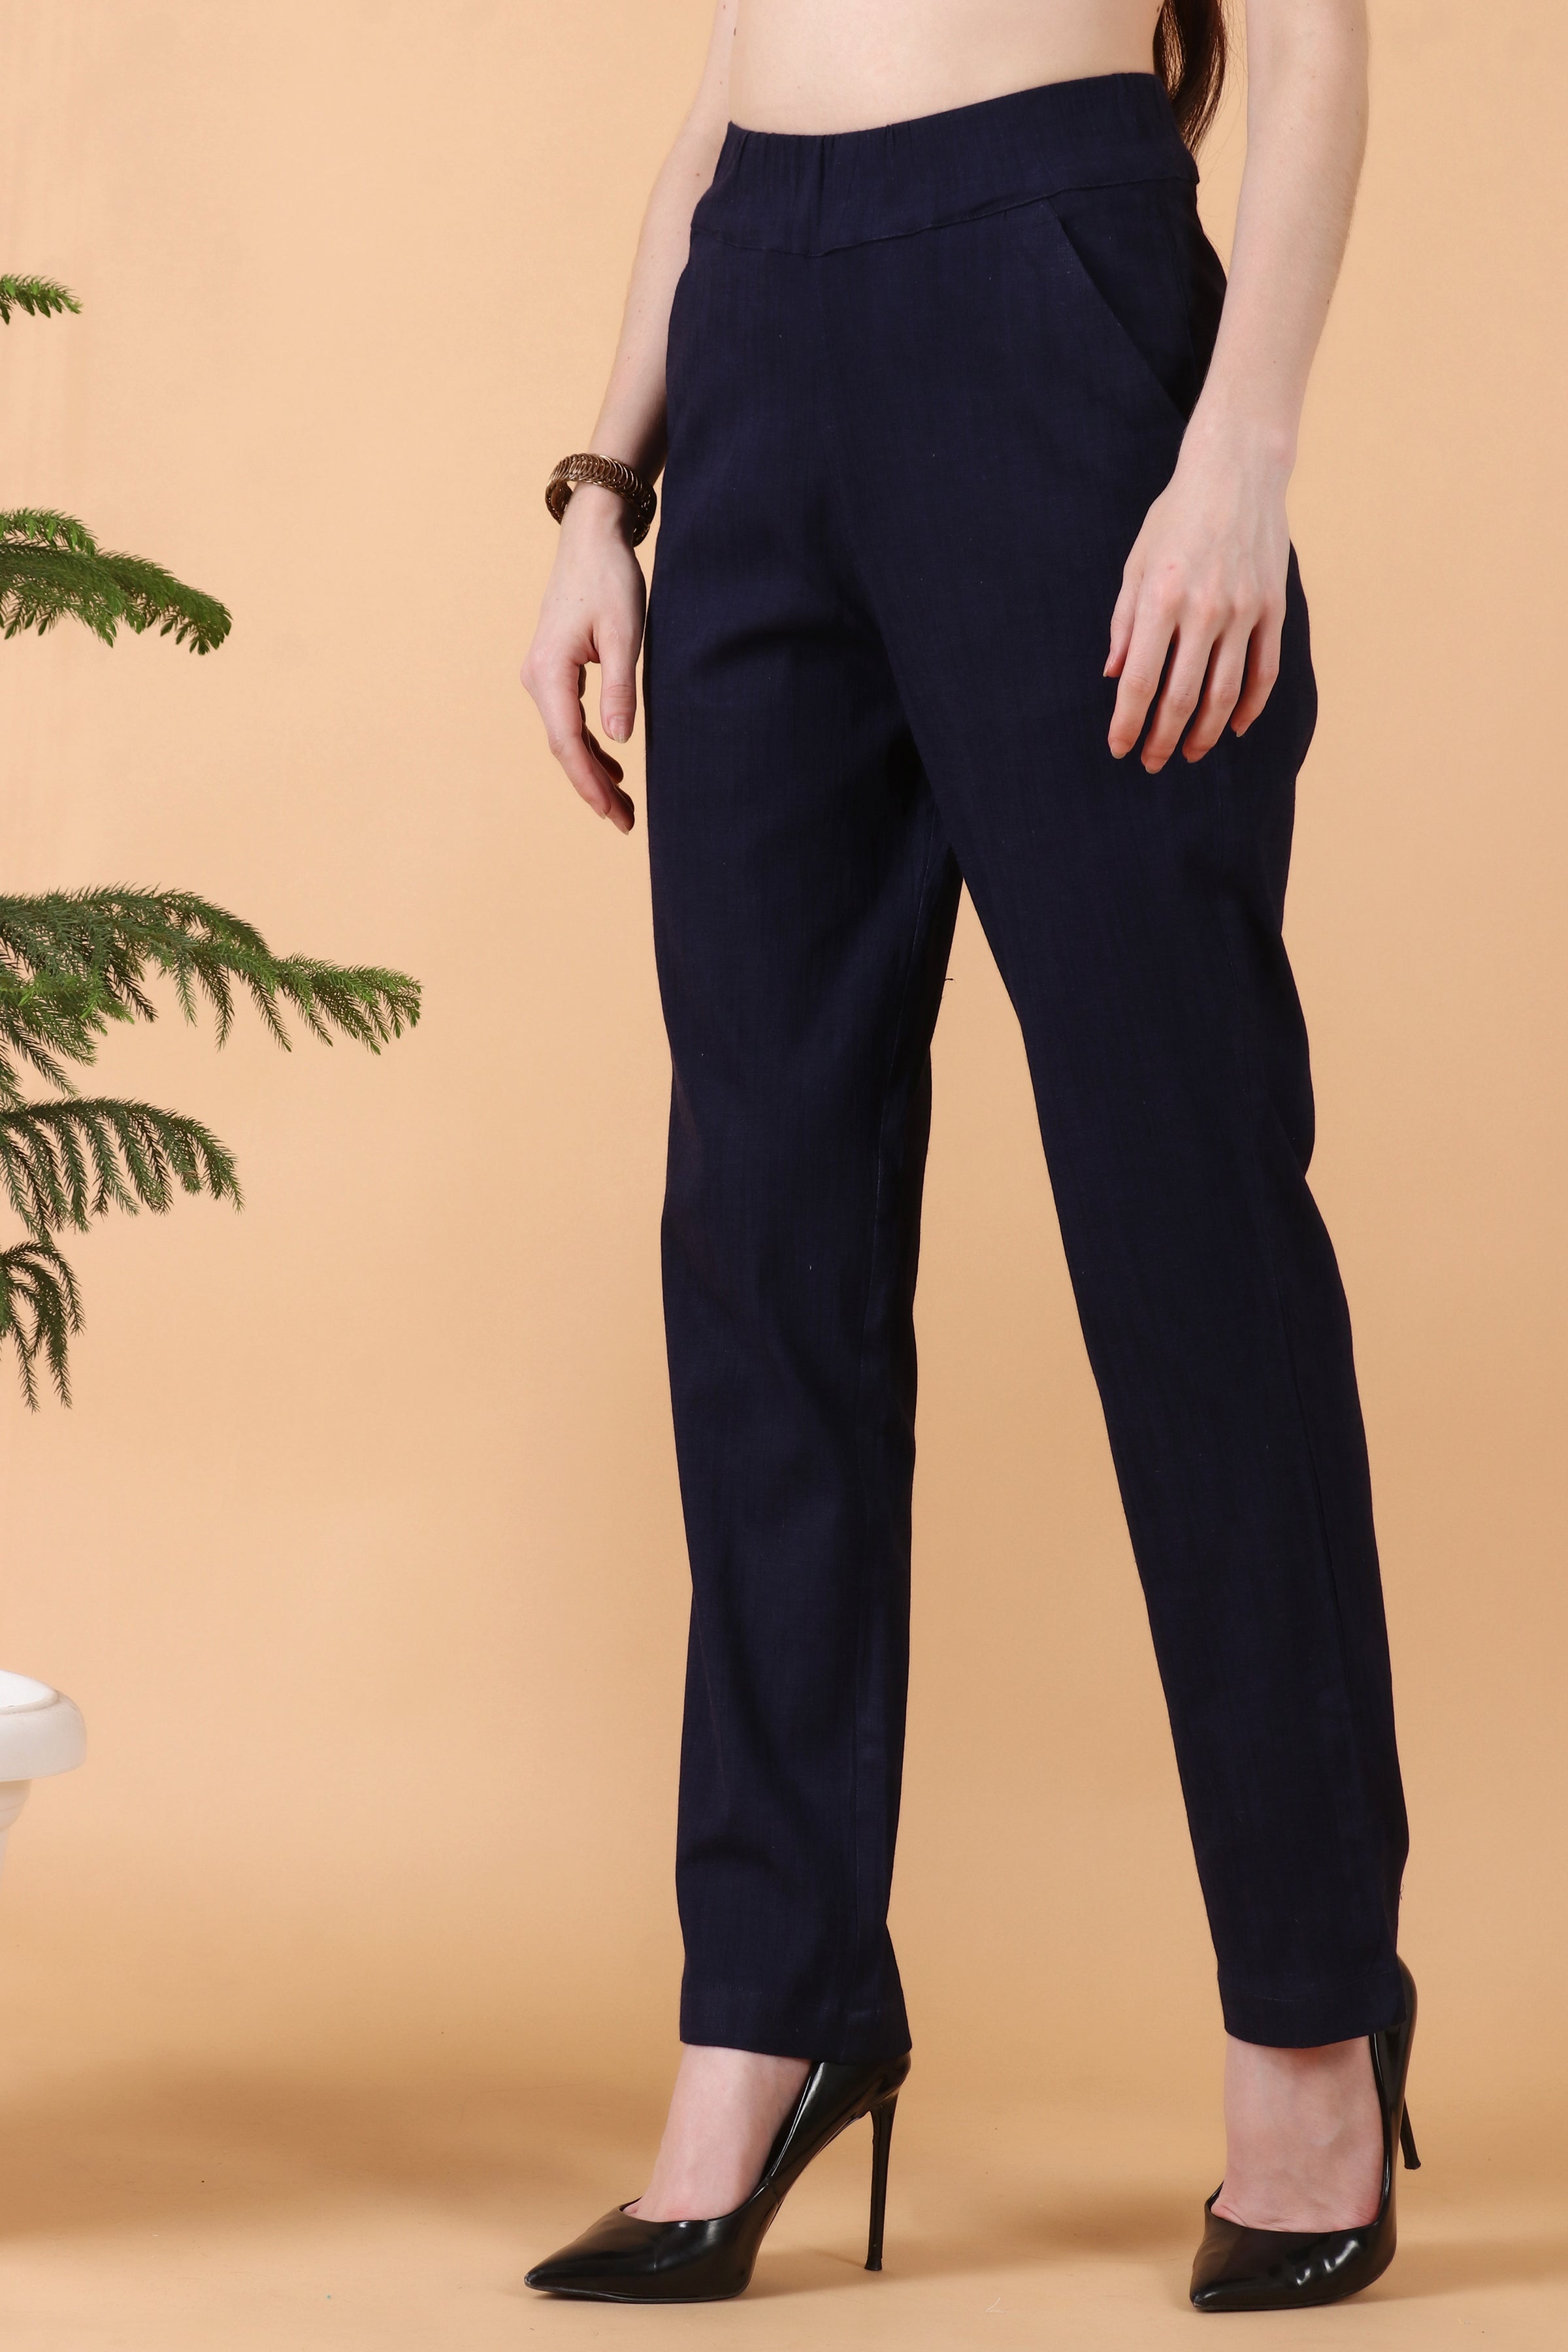 Buy Plus Size Formal Pants  Plus Size Stretchable Pants  Apella